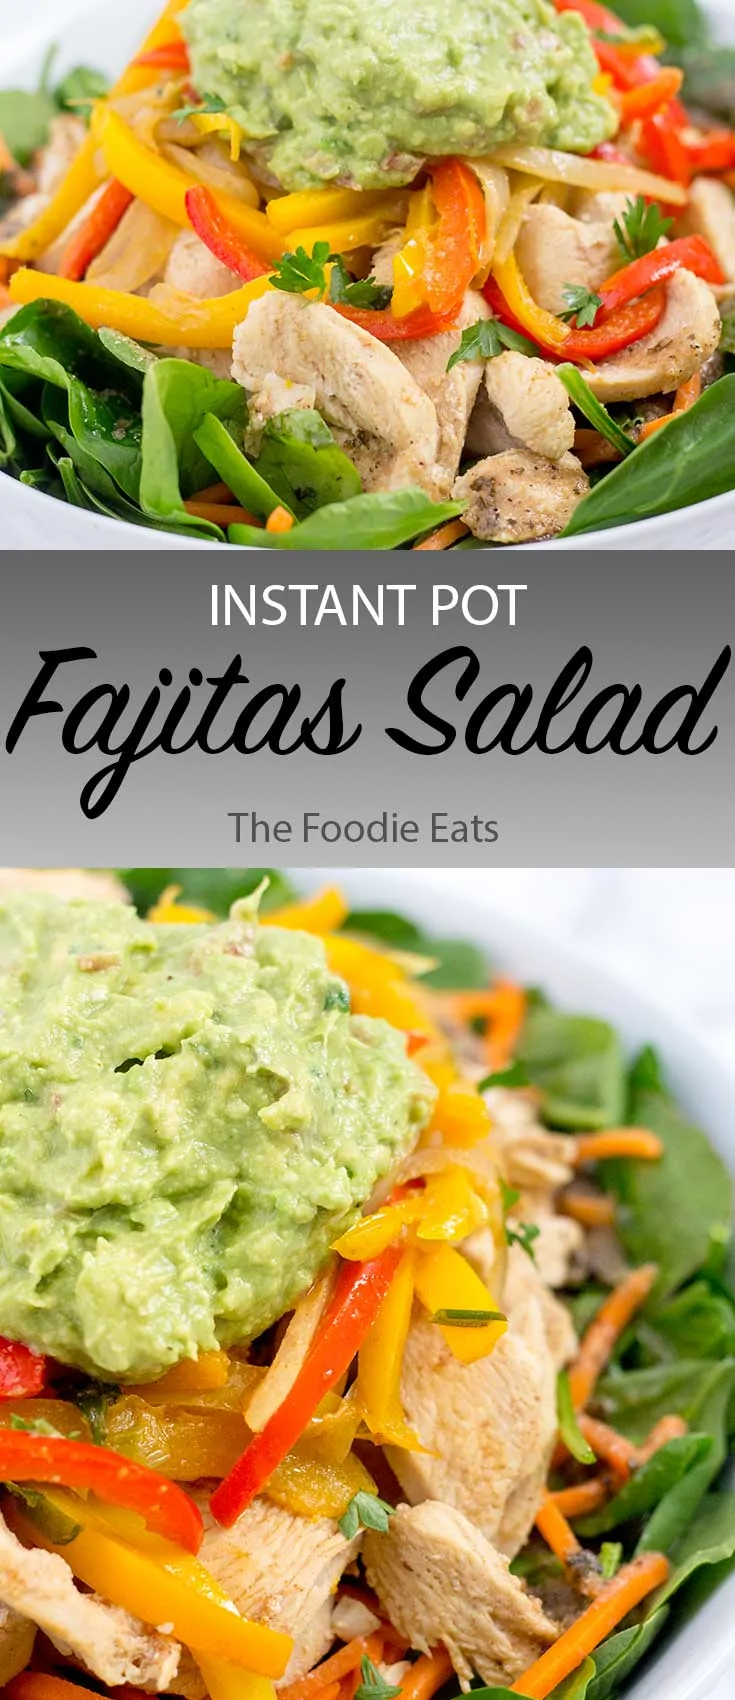 fajitas salad image for Pinterest